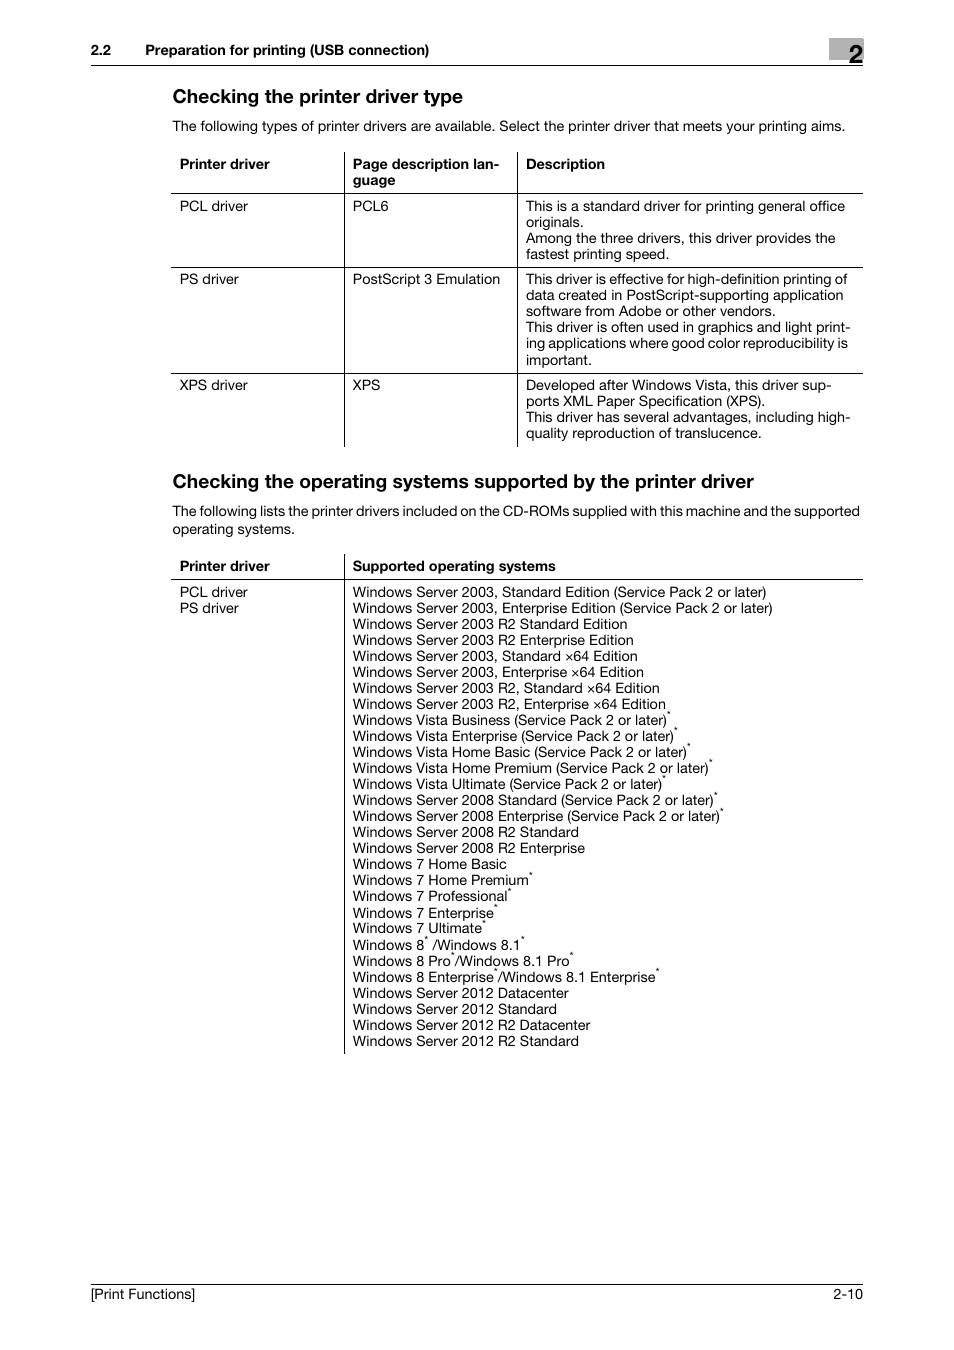 Checking the printer driver type | Konica Minolta bizhub 4050 User Manual | Page 20 / 115